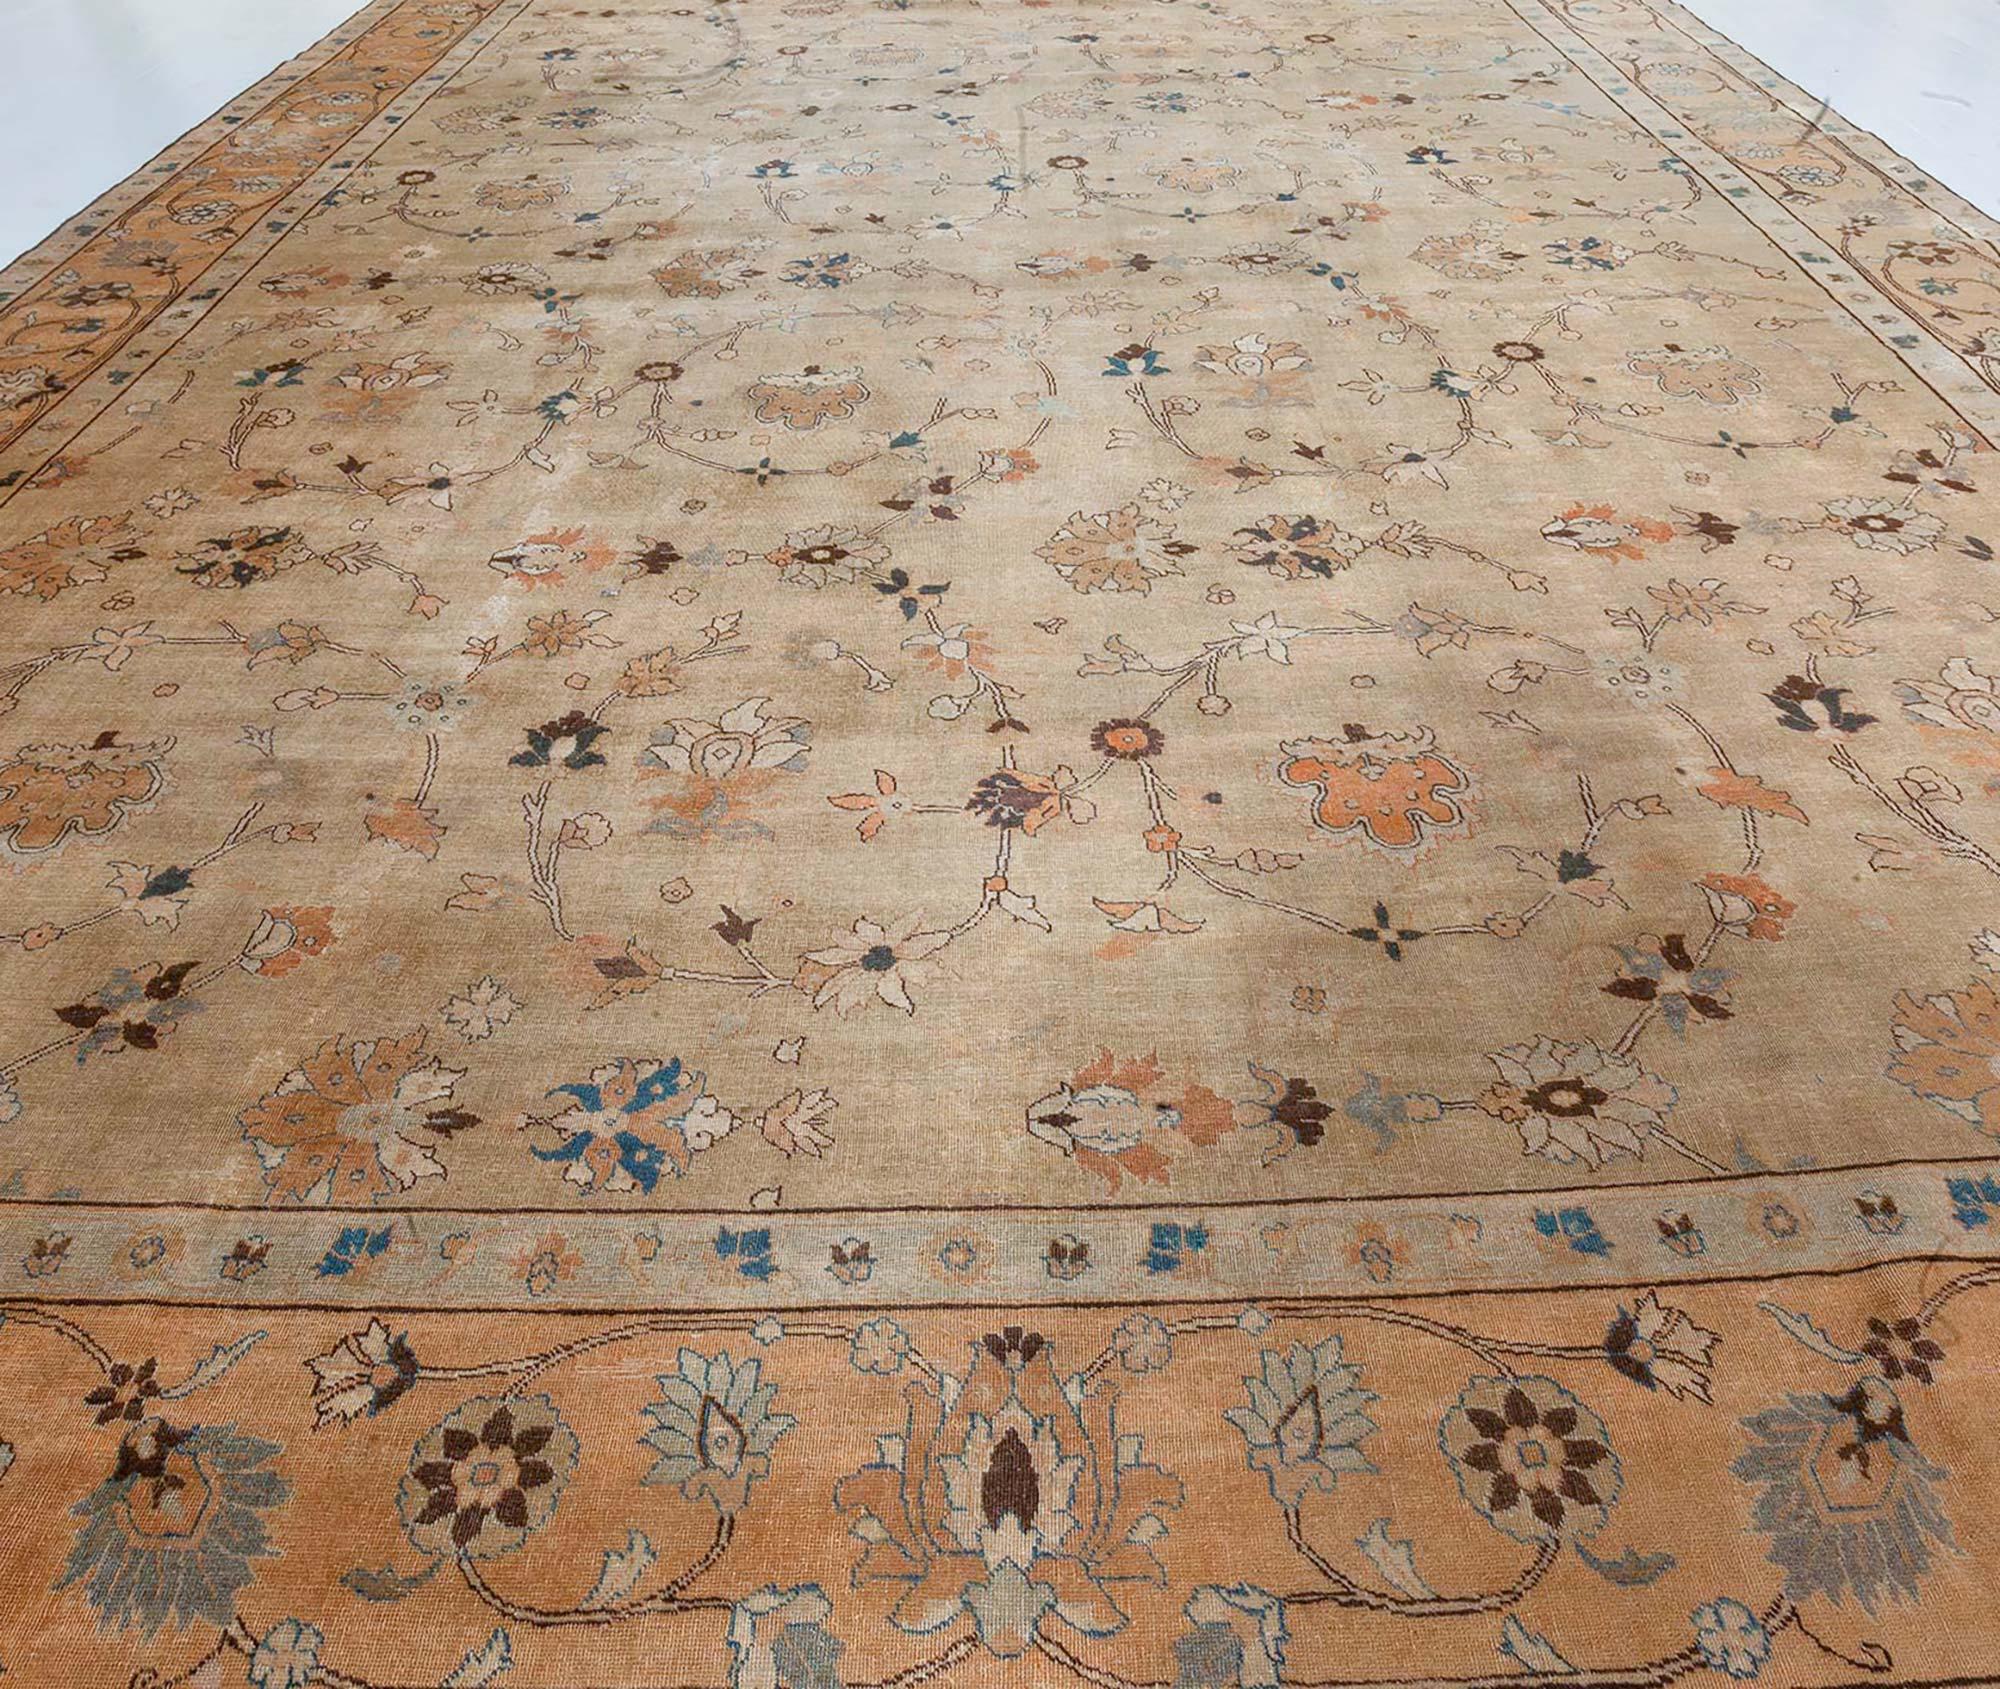 Authentic Persian Tabriz handmade wool carpet
Size: 11'7